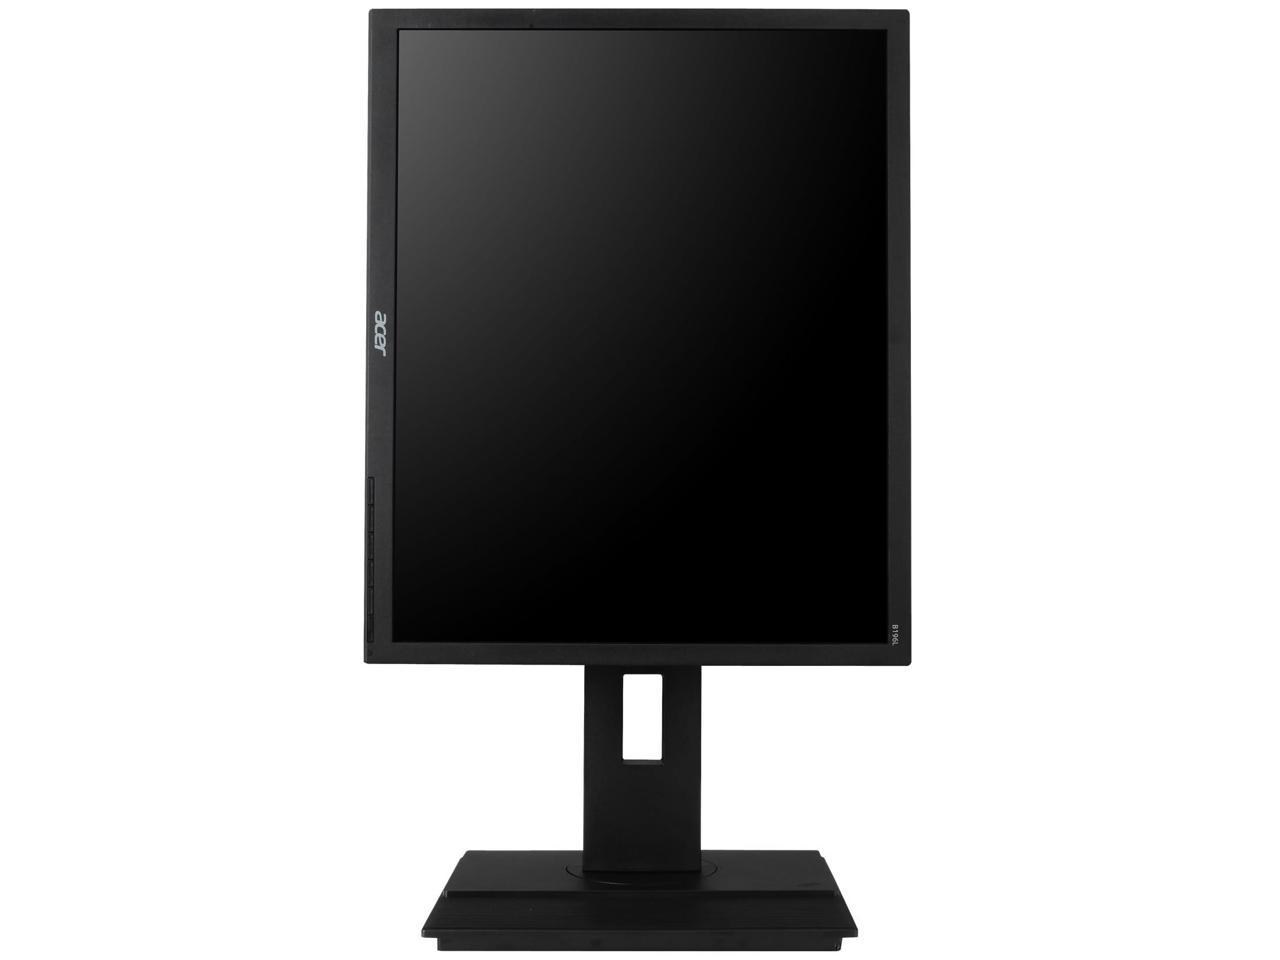 Acer B196L Aymdprz 19 Inch IPS Monitor LCD Monitor